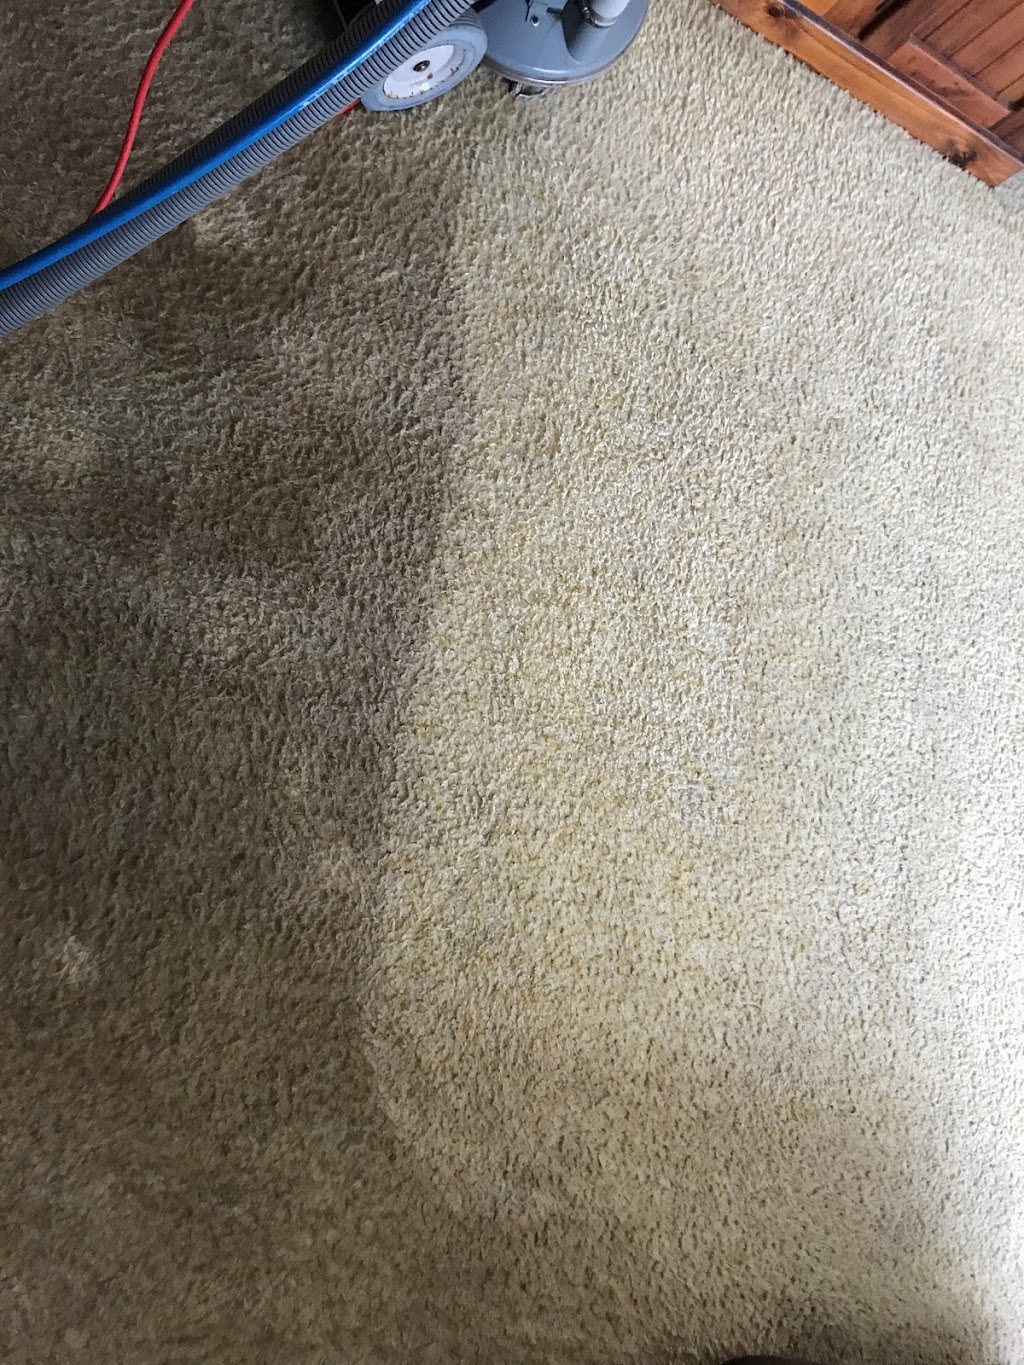 Chem-Dry Cleaner Carpets | 44 Poplar Parade, Youngtown TAS 7249, Australia | Phone: 0439 733 977